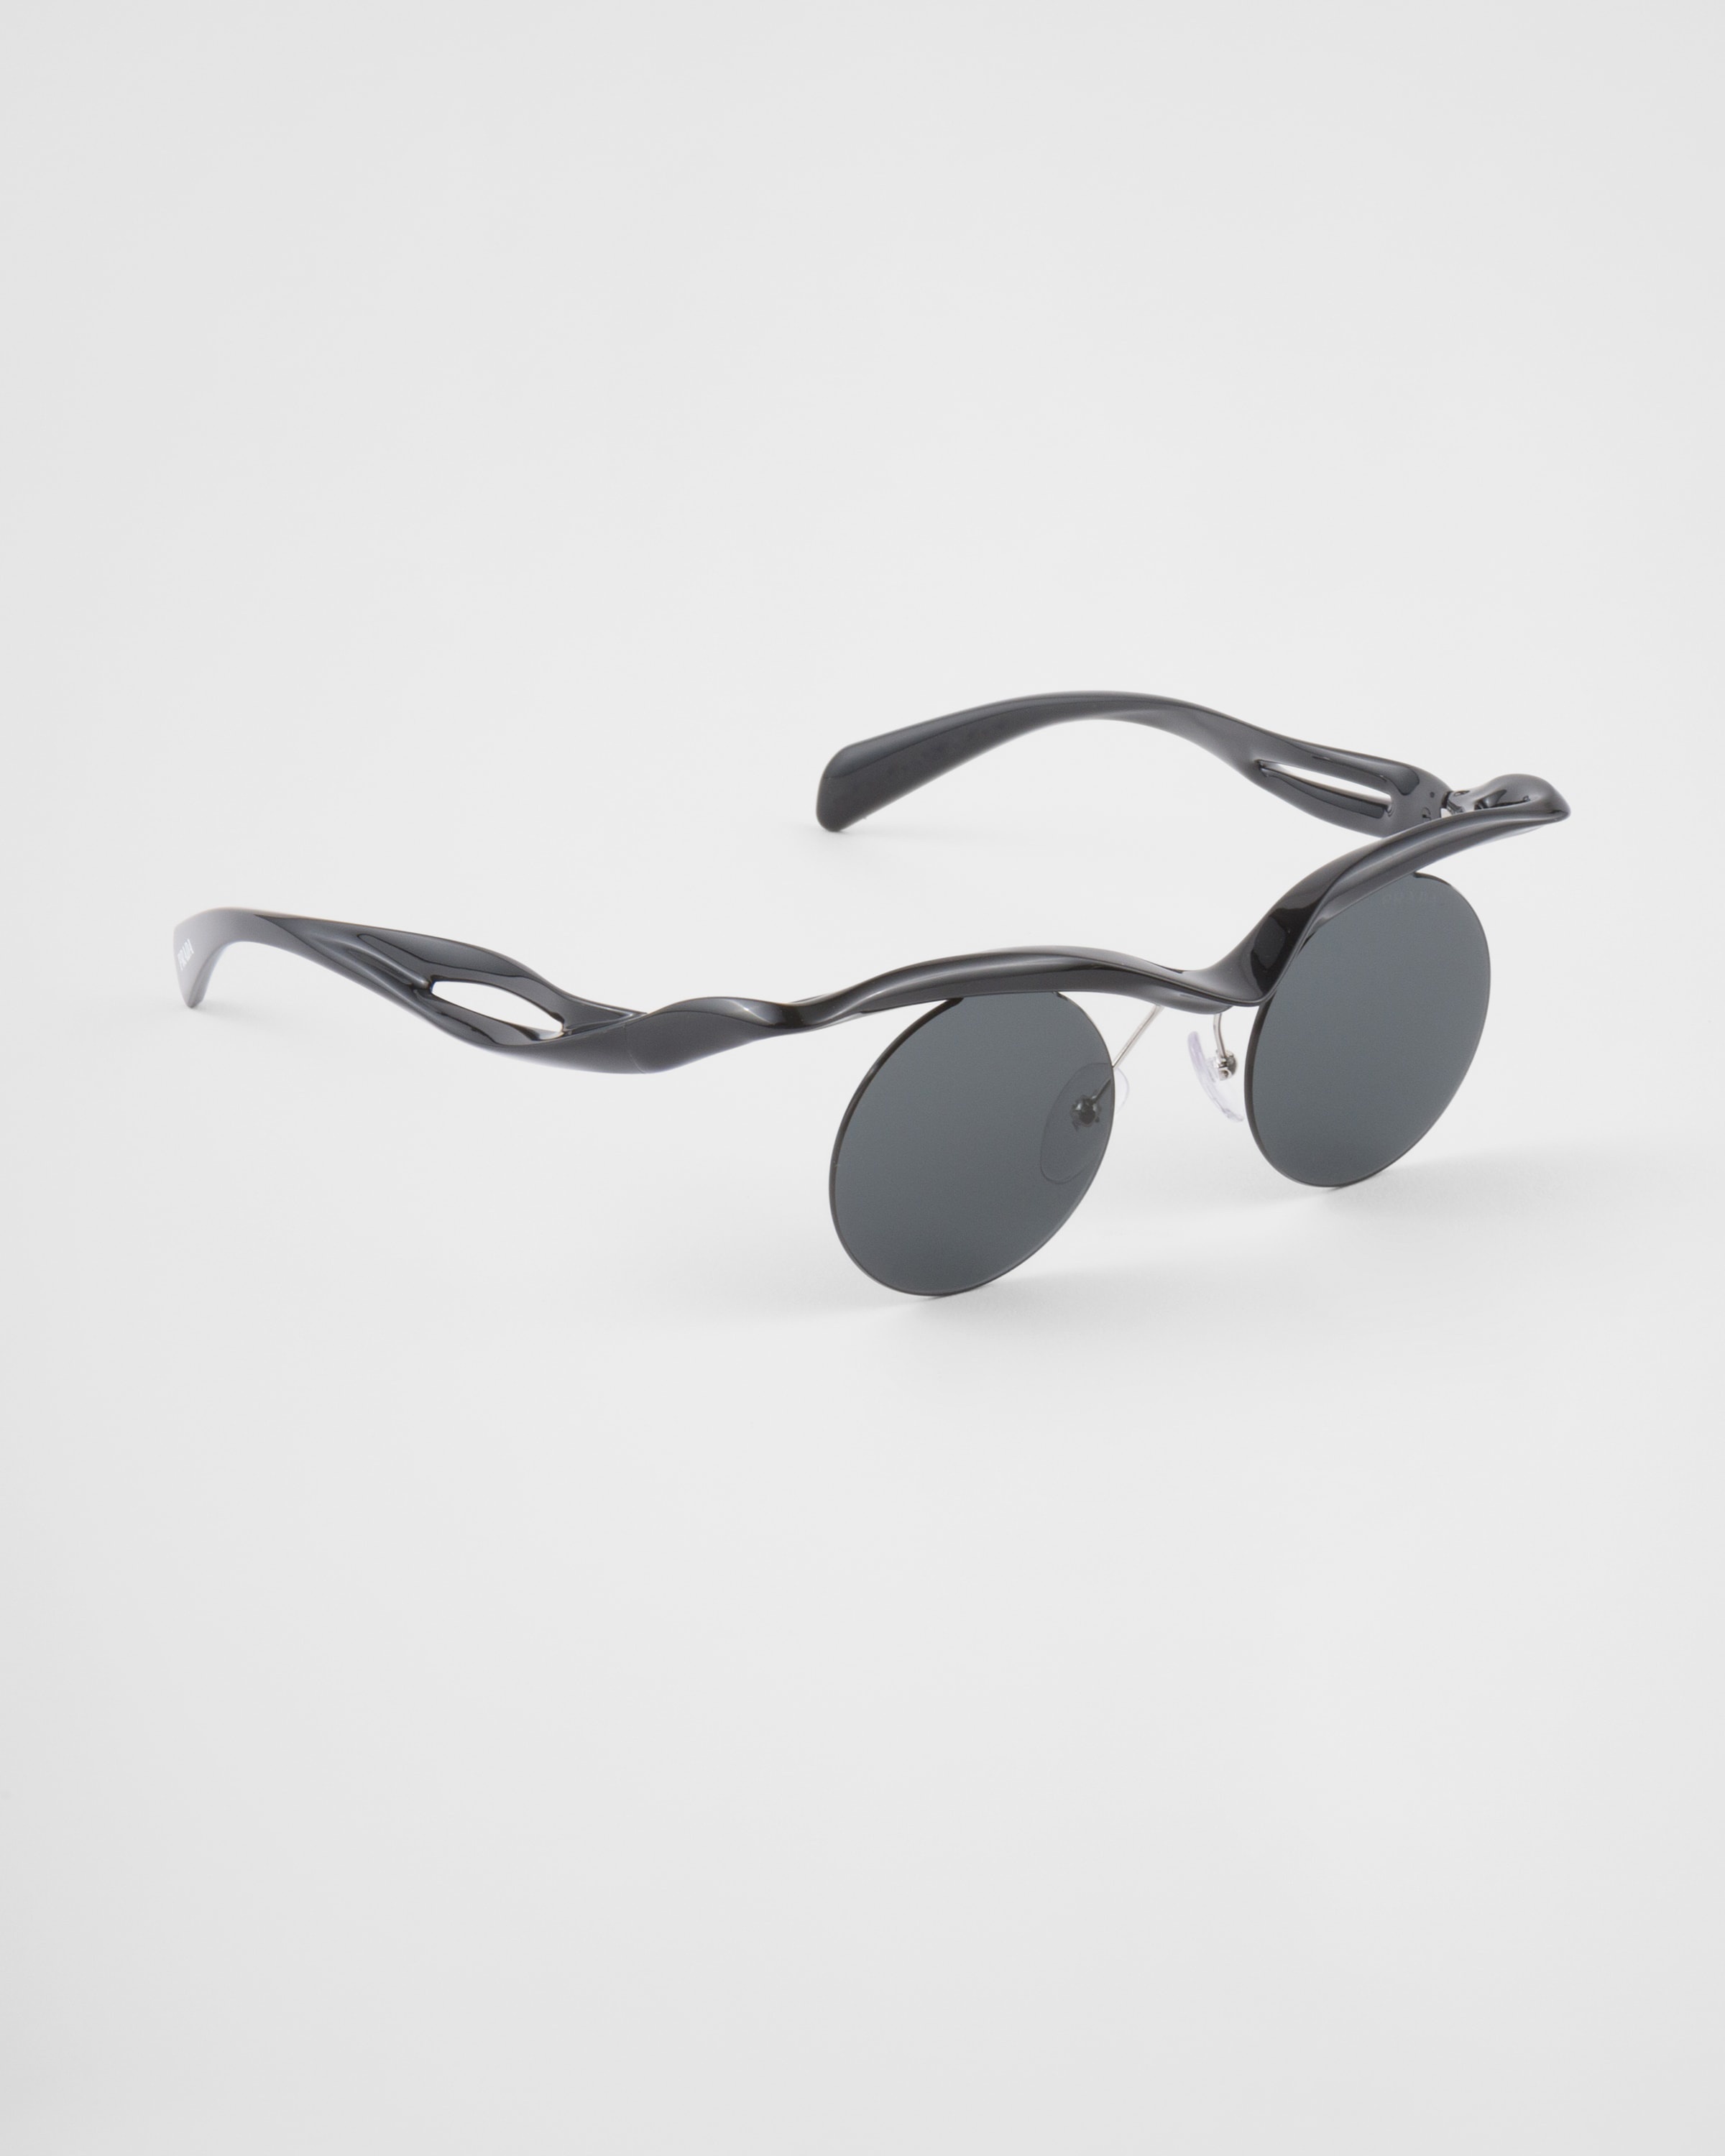 Runway sunglasses - 2